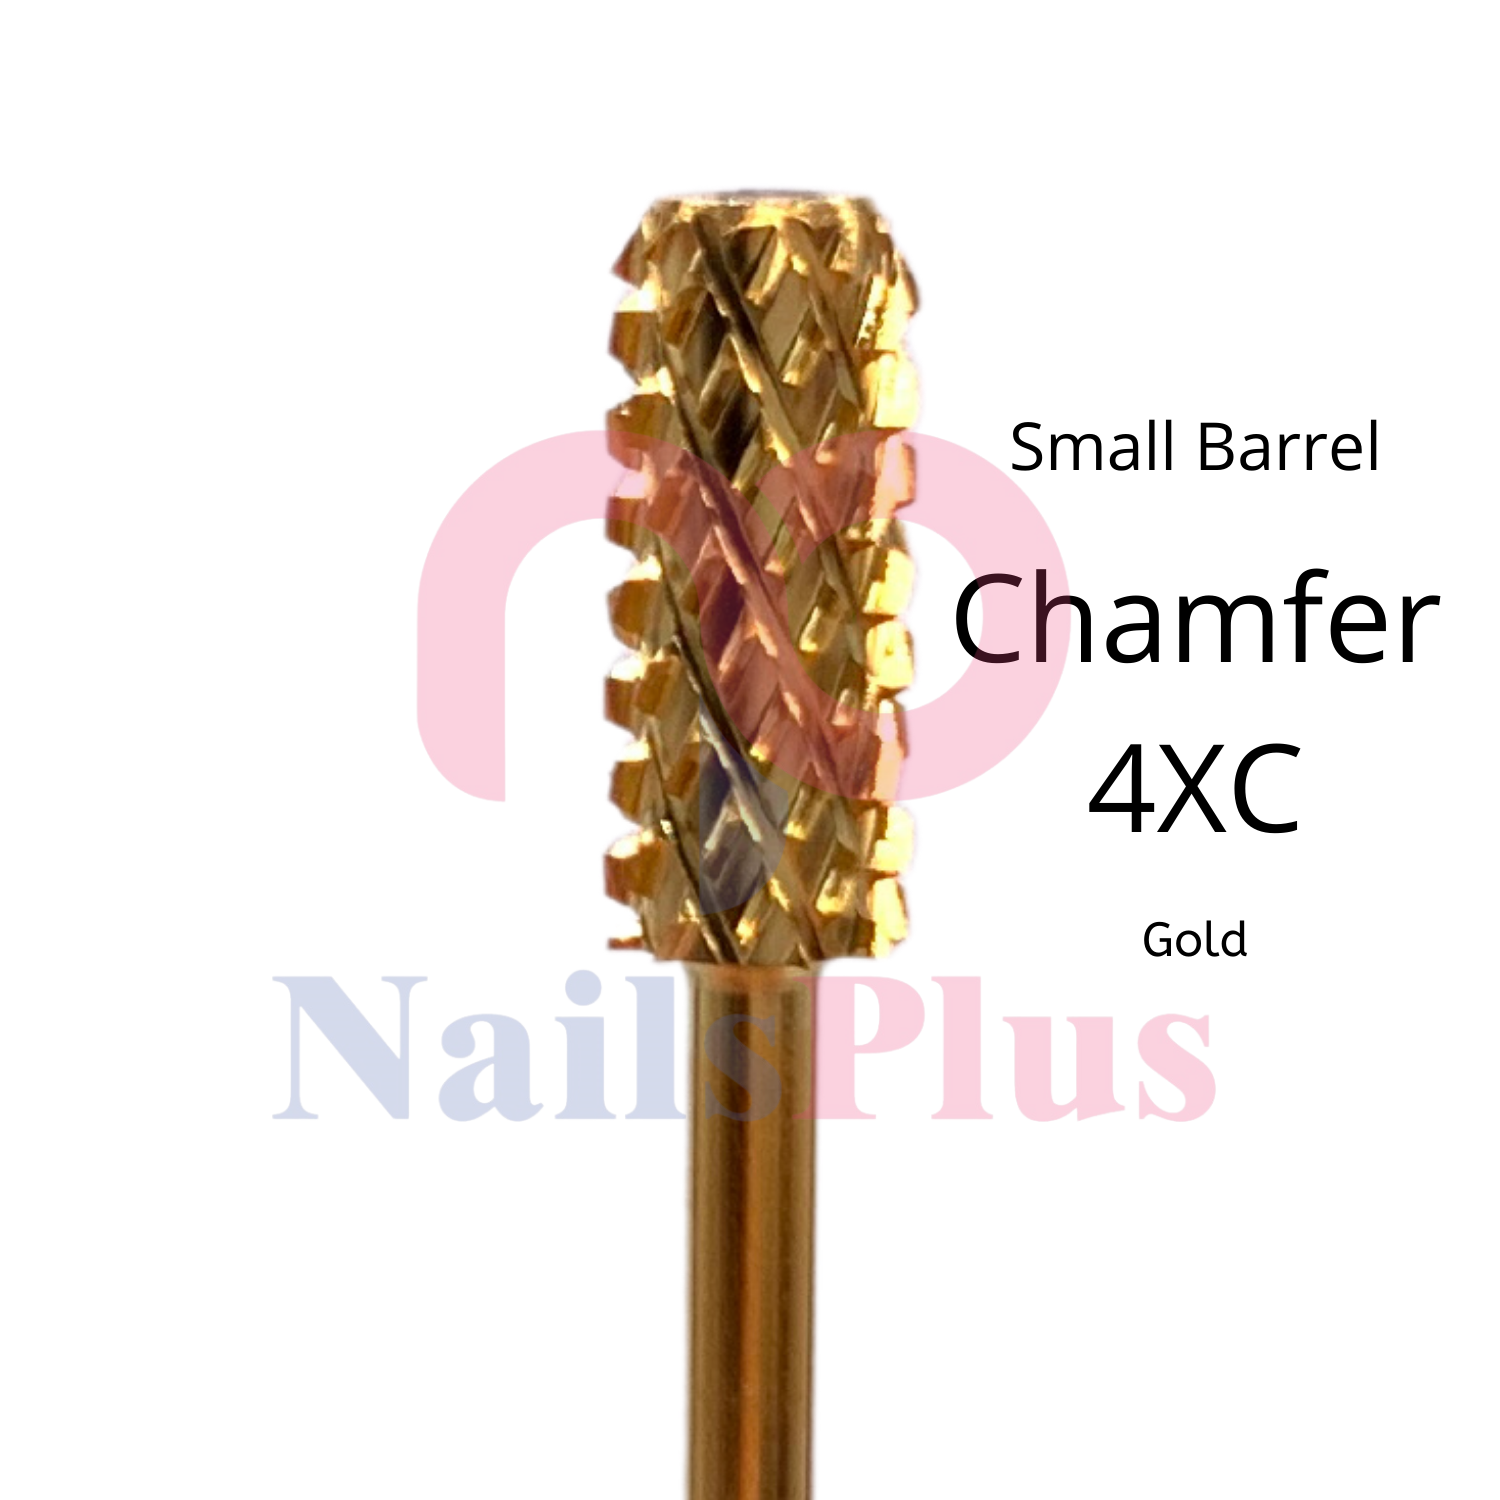 Small Barrel - Chamfer - 4XC - Gold